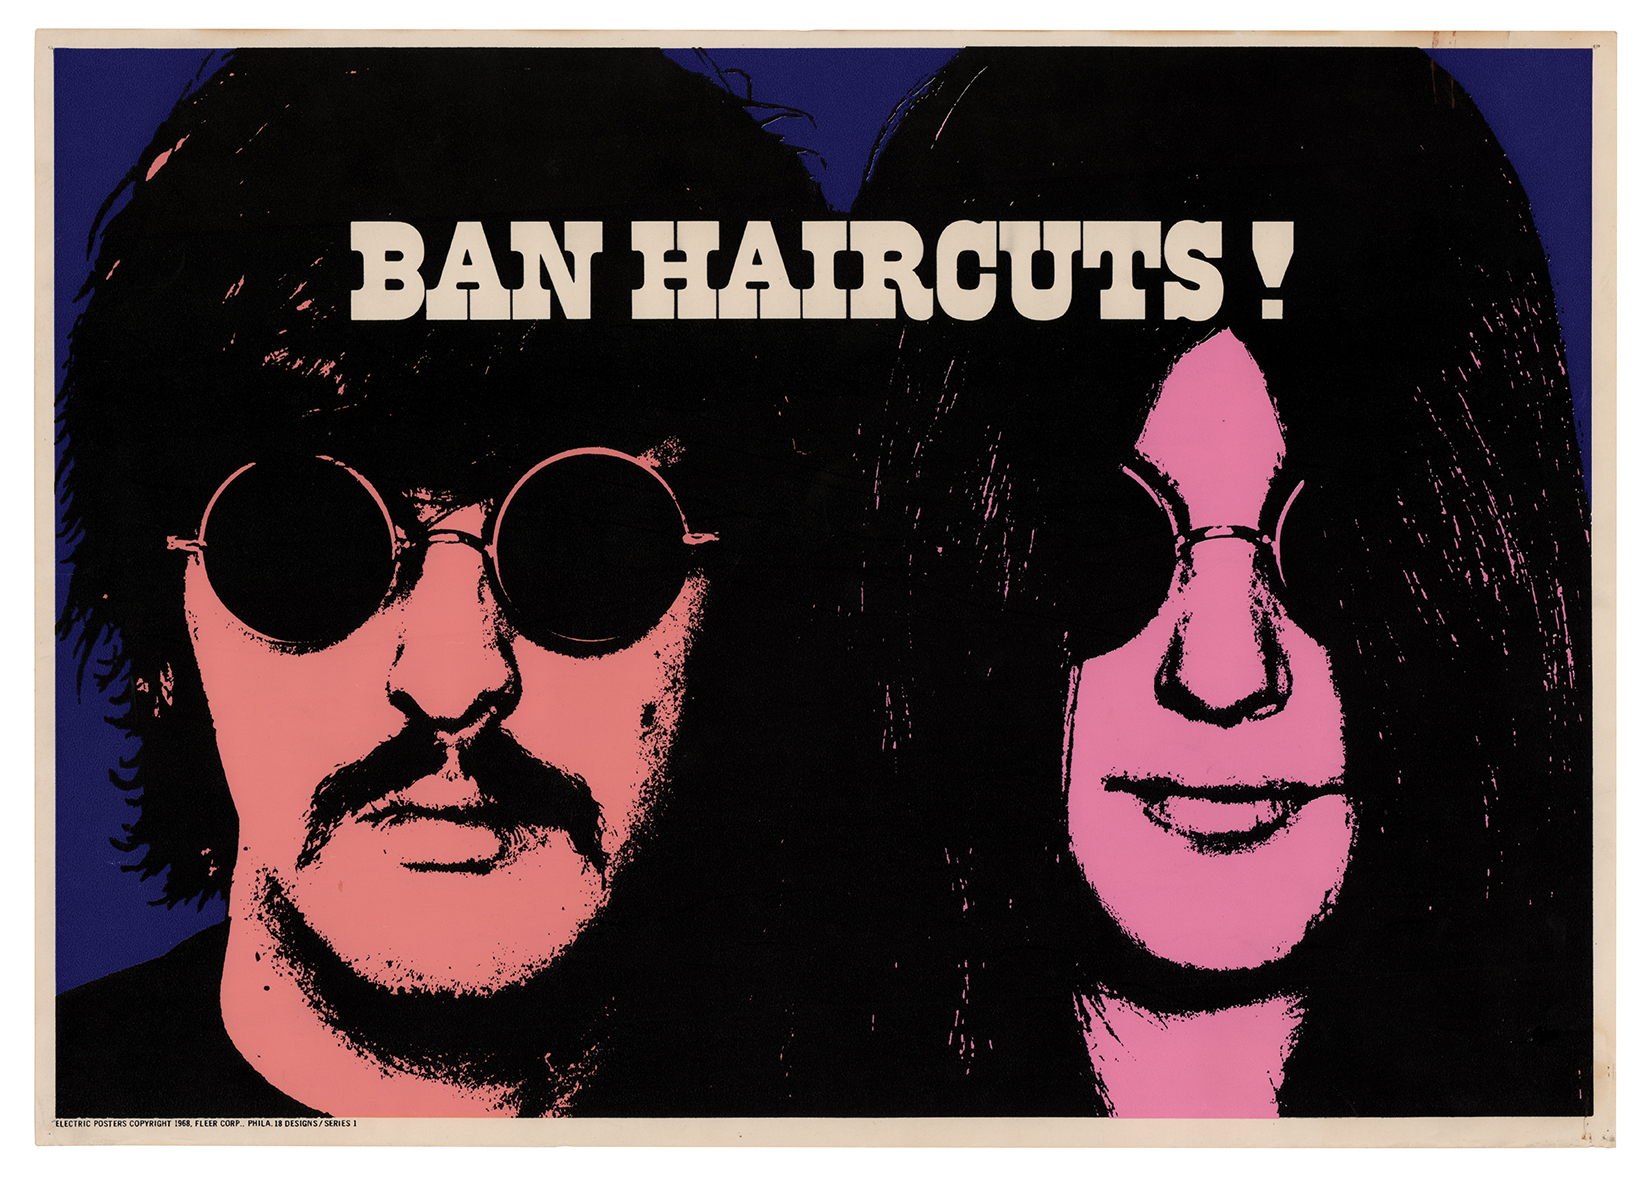 Lot #9291 Fleer 1968 'Ban Haircuts' Electric Blacklight Poster - Image 1